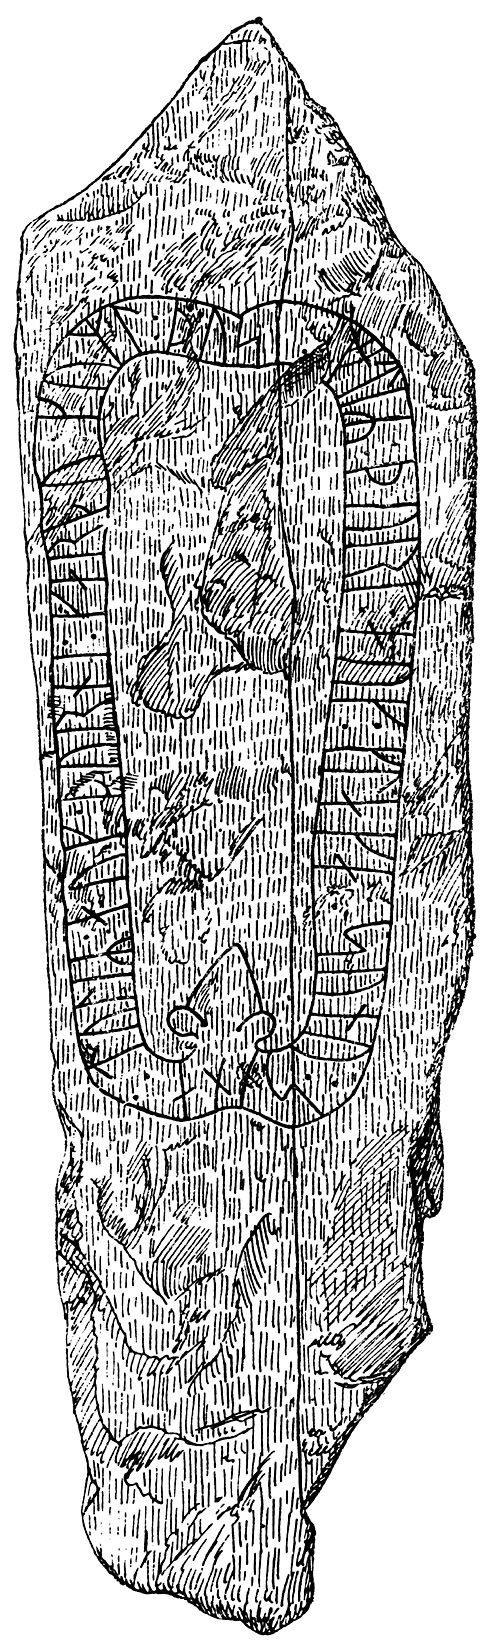 Rune Stone at Hökerum, Municipality of Ulricehamn, Sweden Rune Stone at Hökerum, Municipality of Ulricehamn, Sweden . Runsten vid Svedjorna i Hökerum, Västergötland.